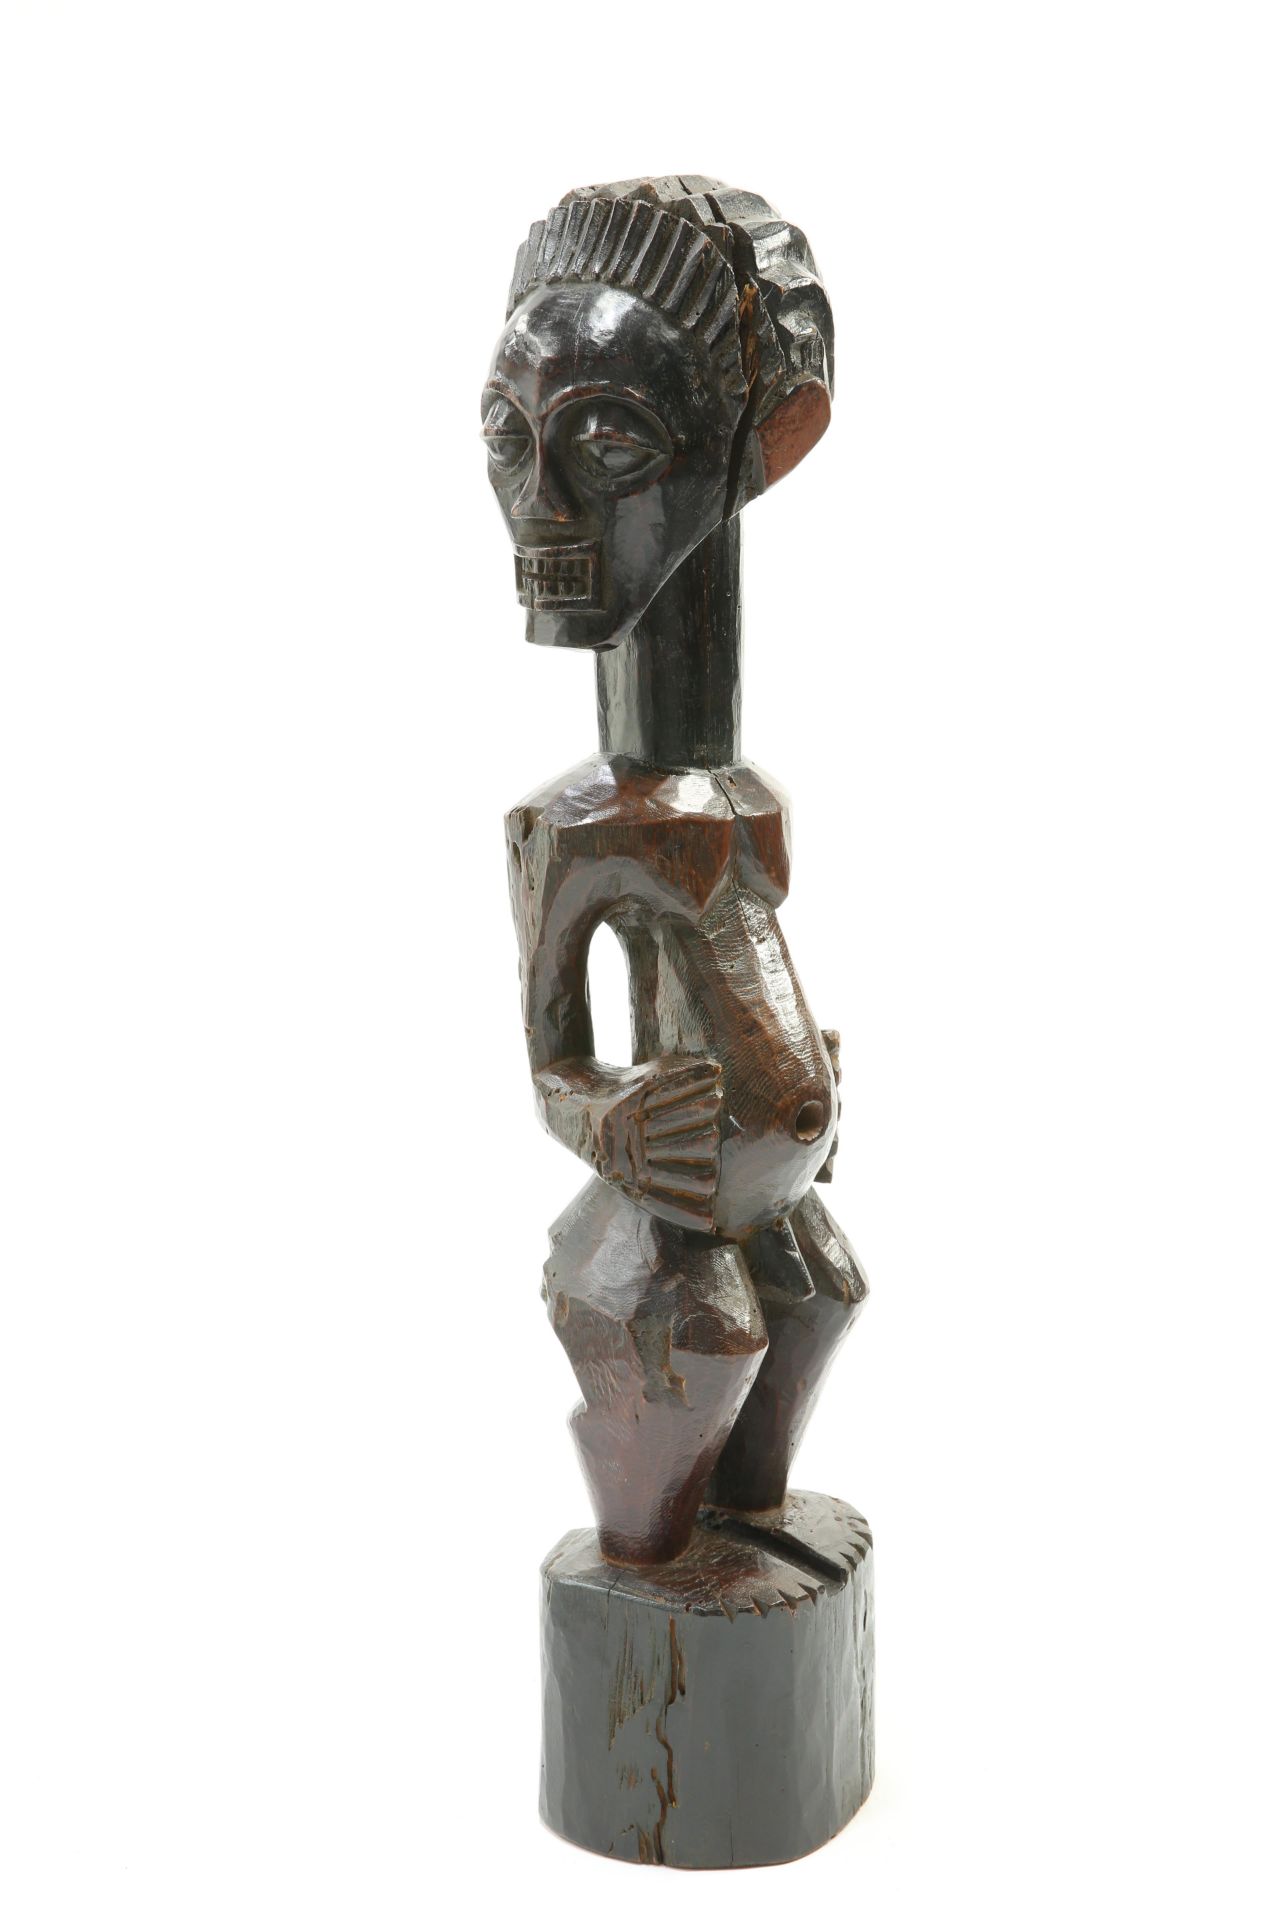 A tribal carved figure, 69cm high